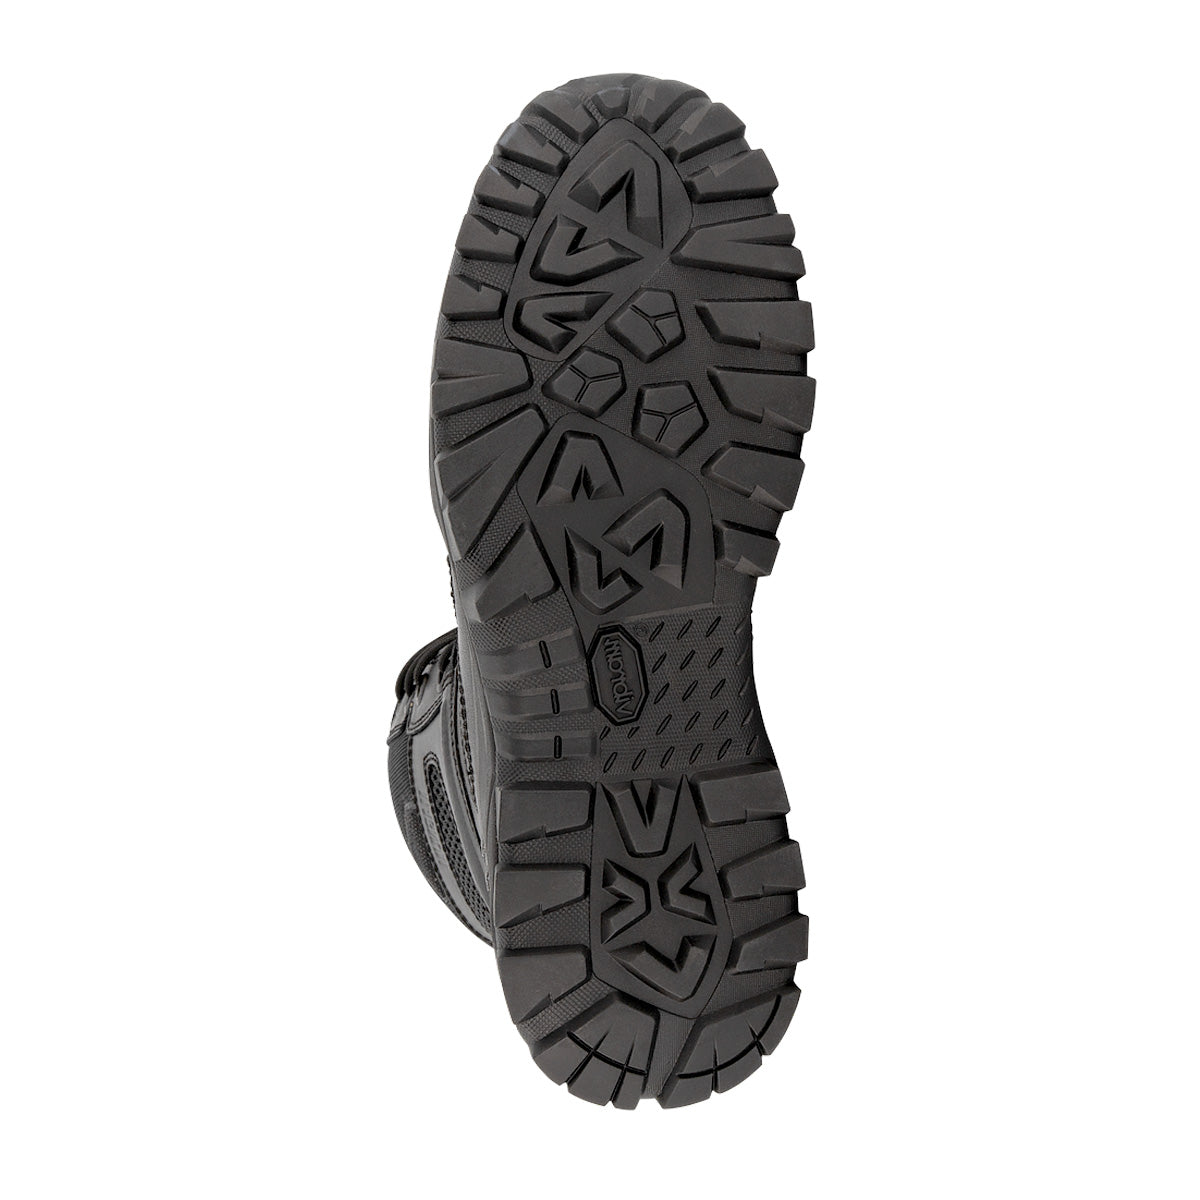 Magnum Elite Spider X 8.0 Side-Zip Boot Black Footwear Magnum Footwear Tactical Gear Supplier Tactical Distributors Australia